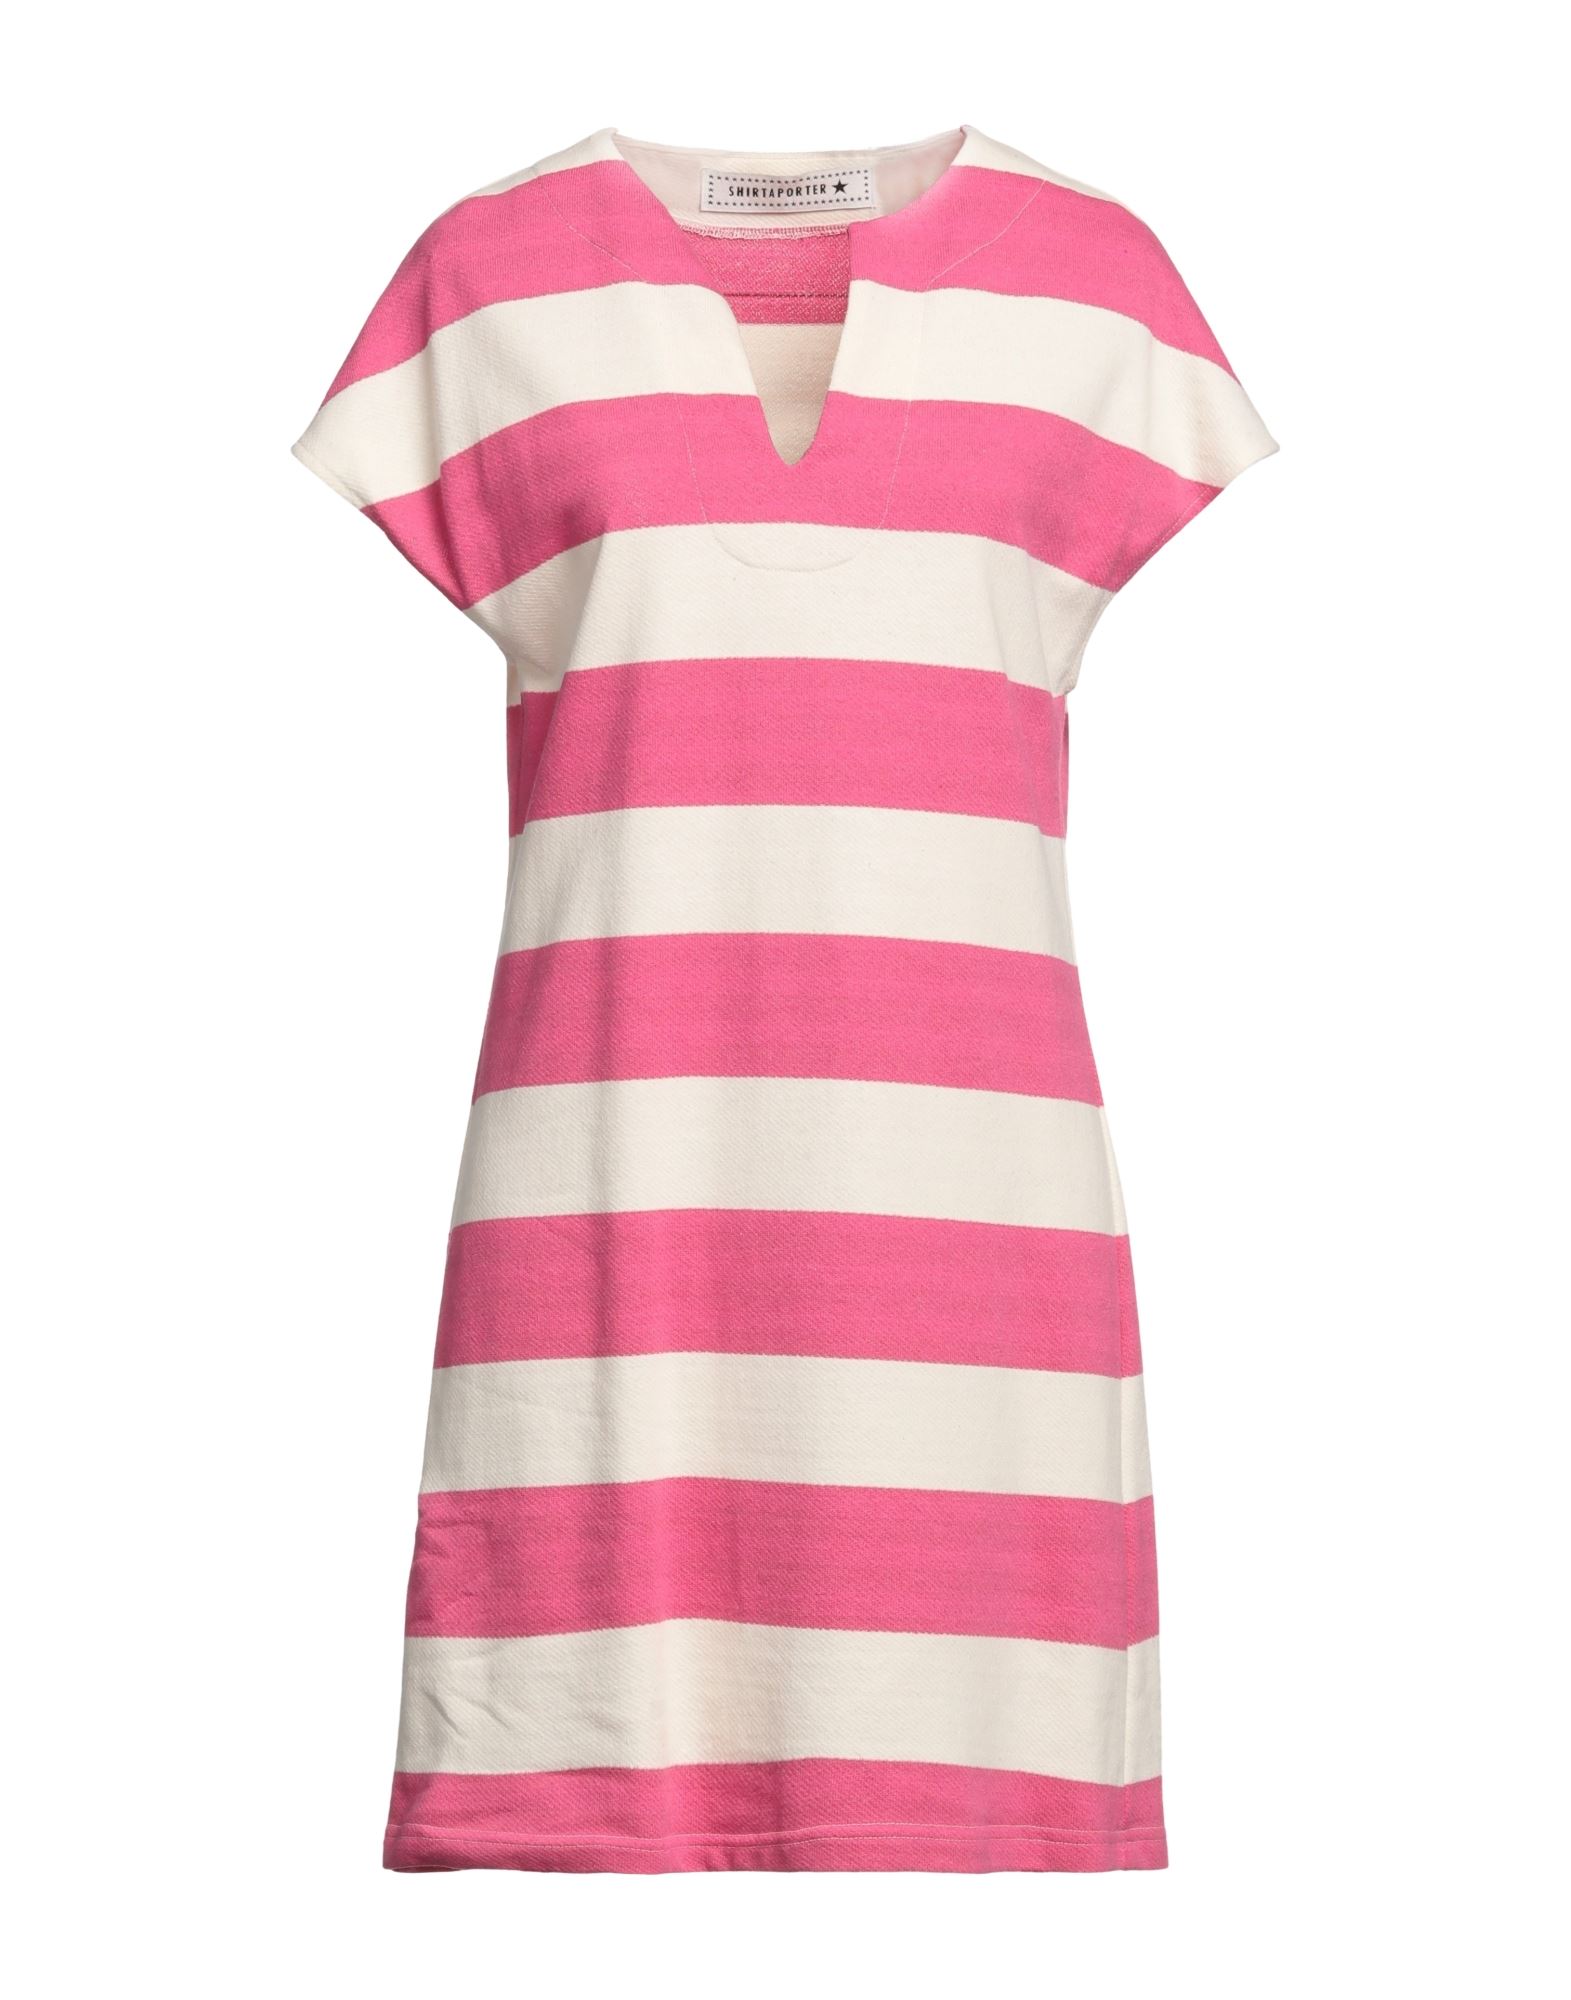 Shirtaporter Short Dresses In Pink